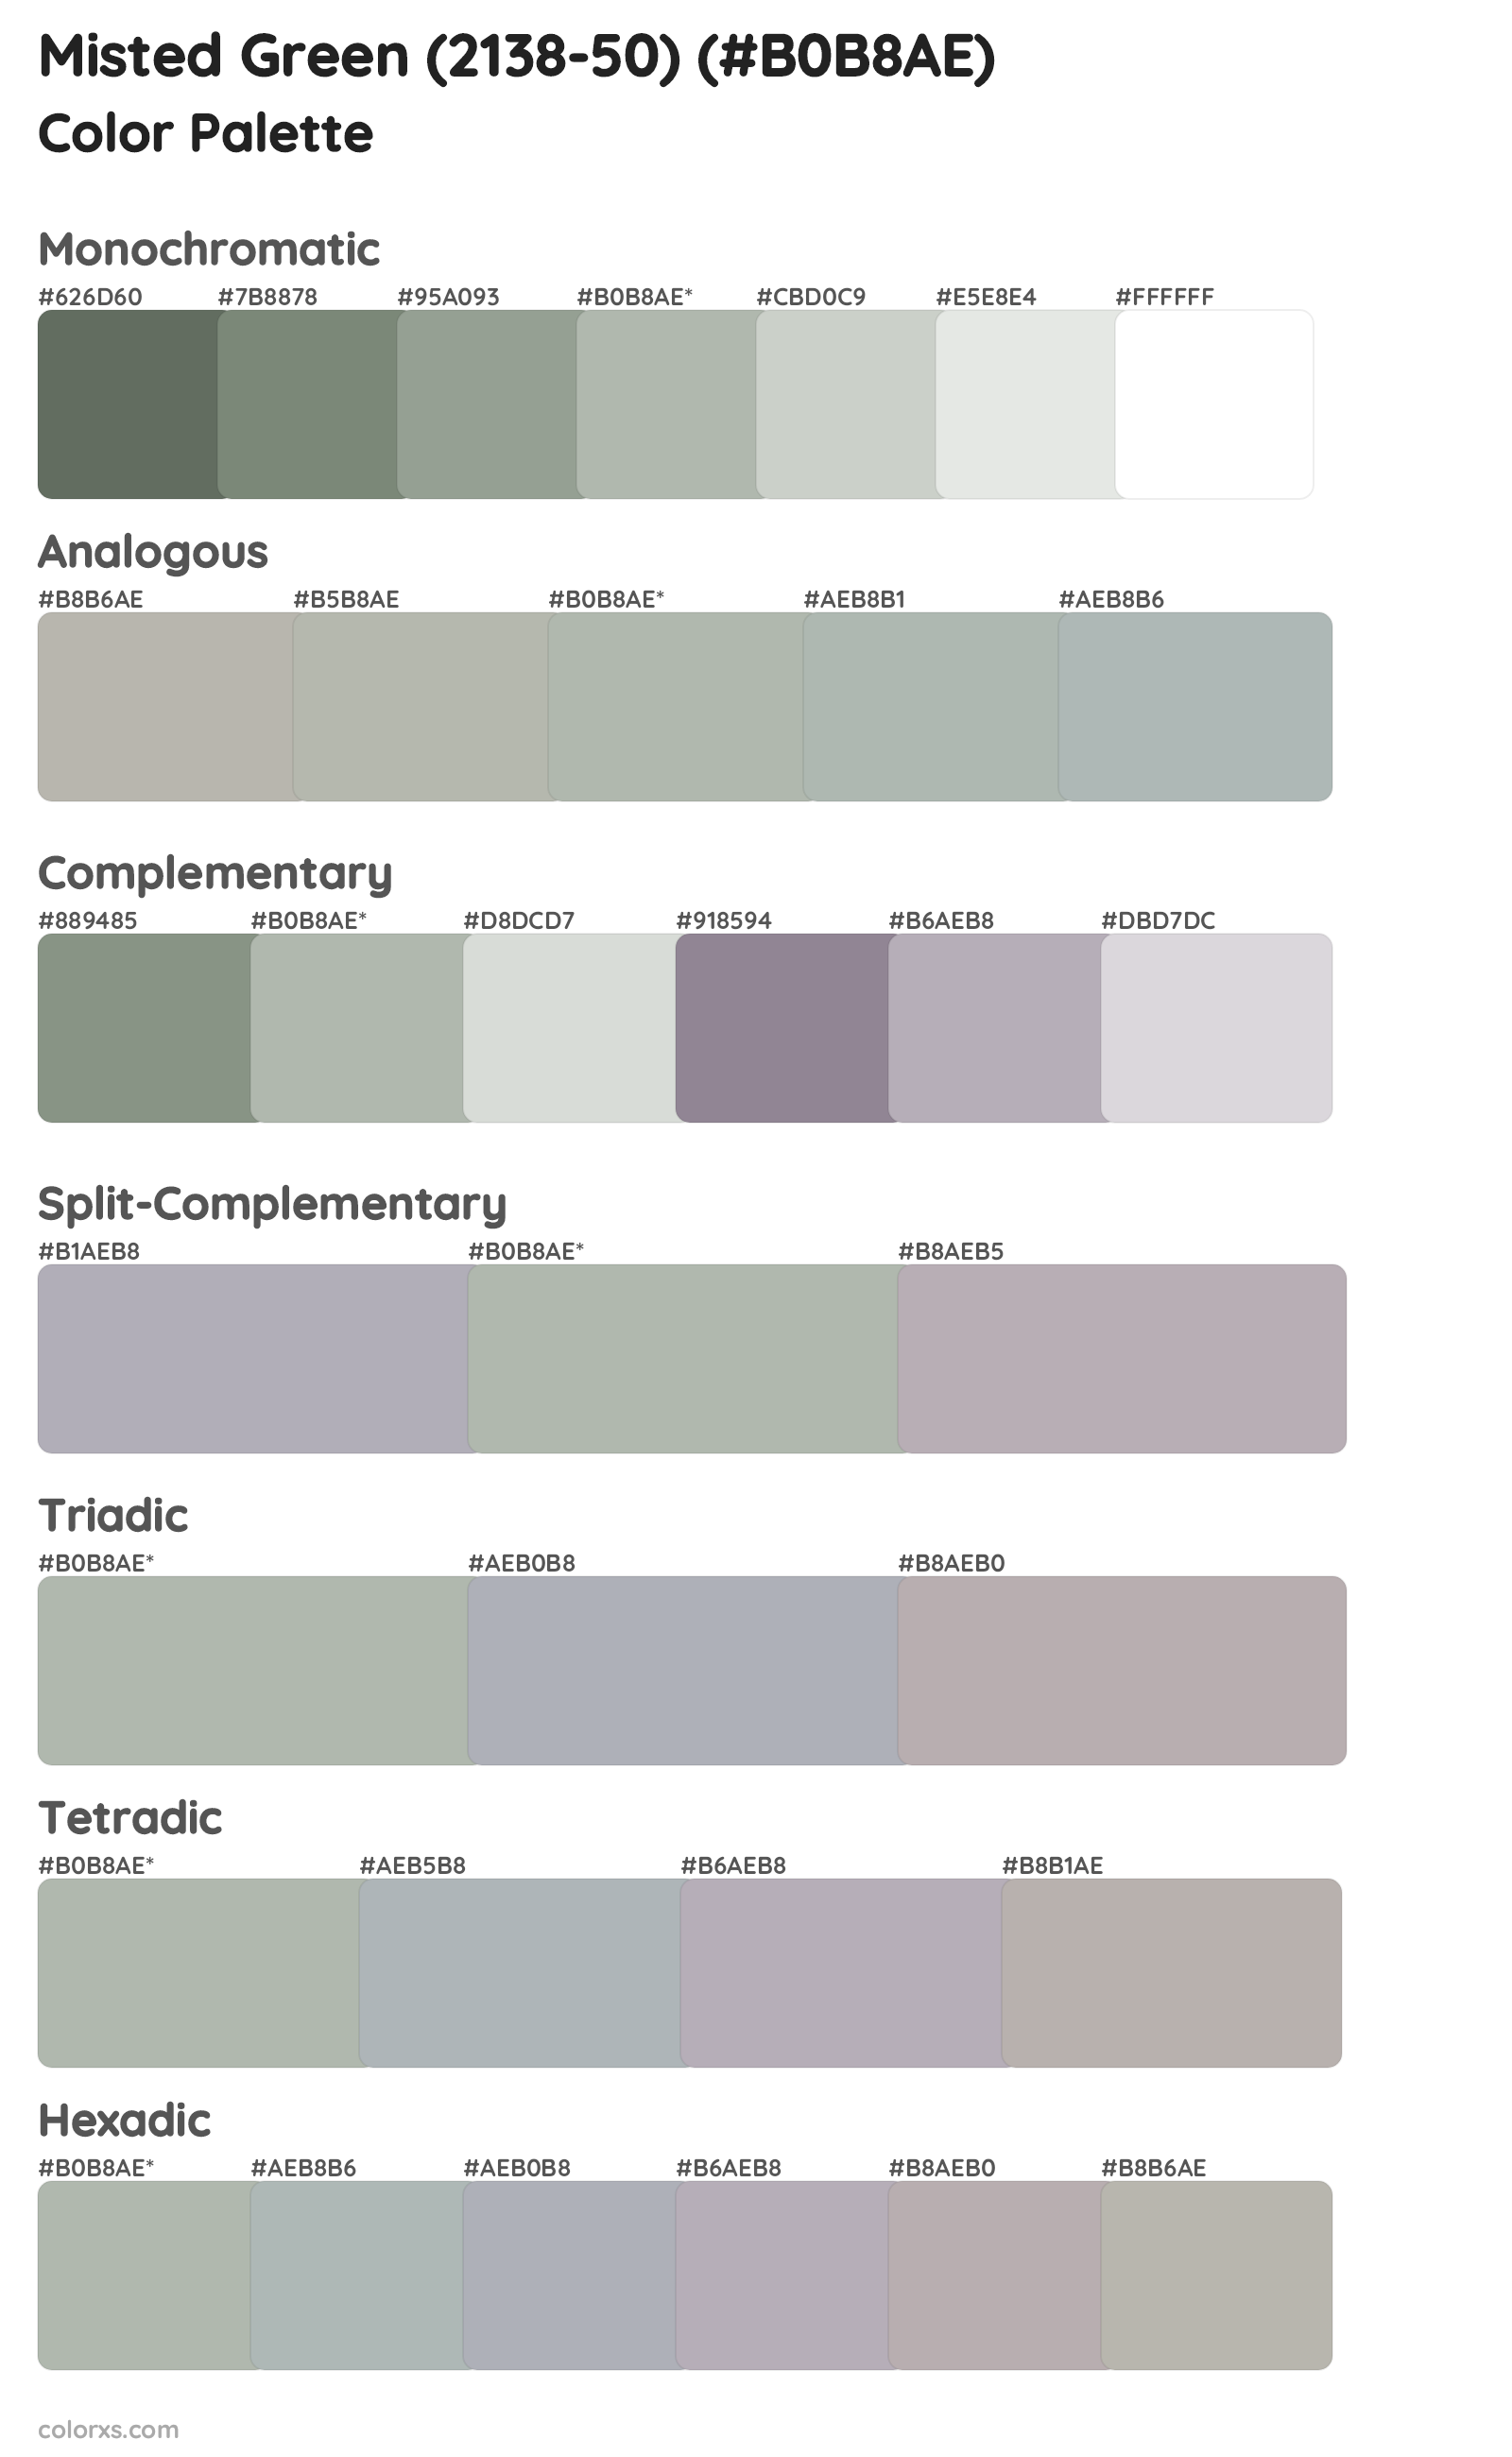 Misted Green (2138-50) Color Scheme Palettes